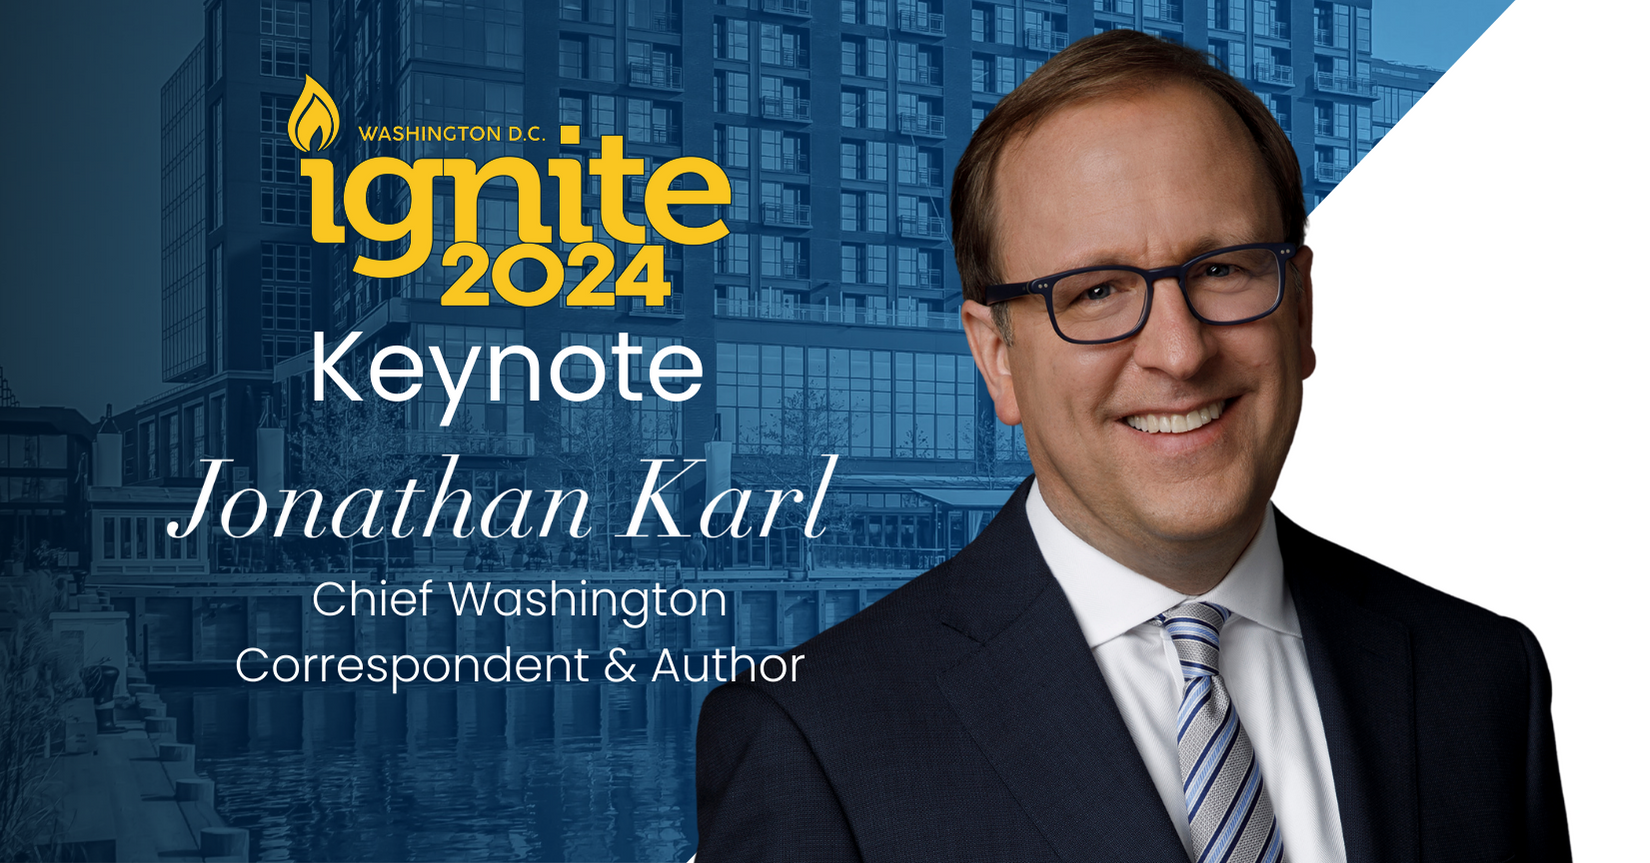 Jonathan Karl added as IGNITE Keynote